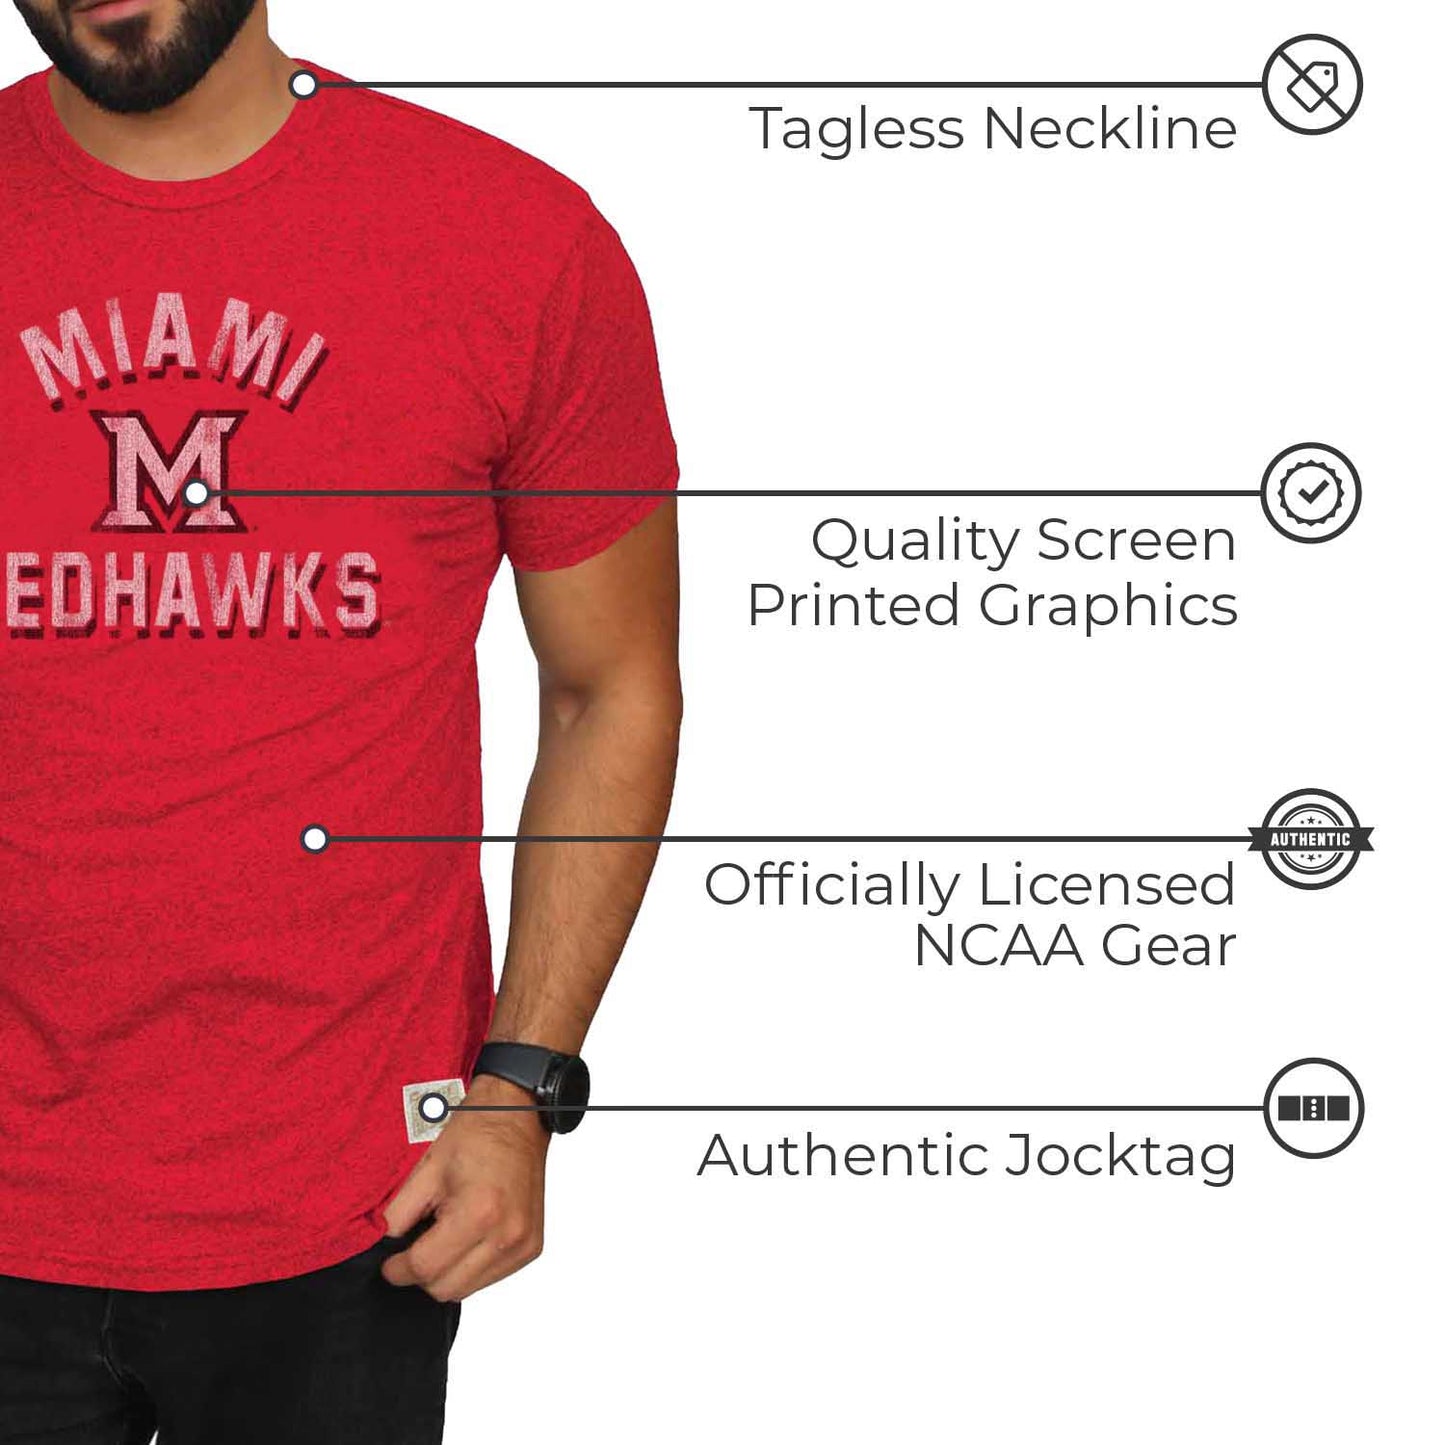 Miami Redhawks Miami Redhawks Adult College Team Color T-Shirt